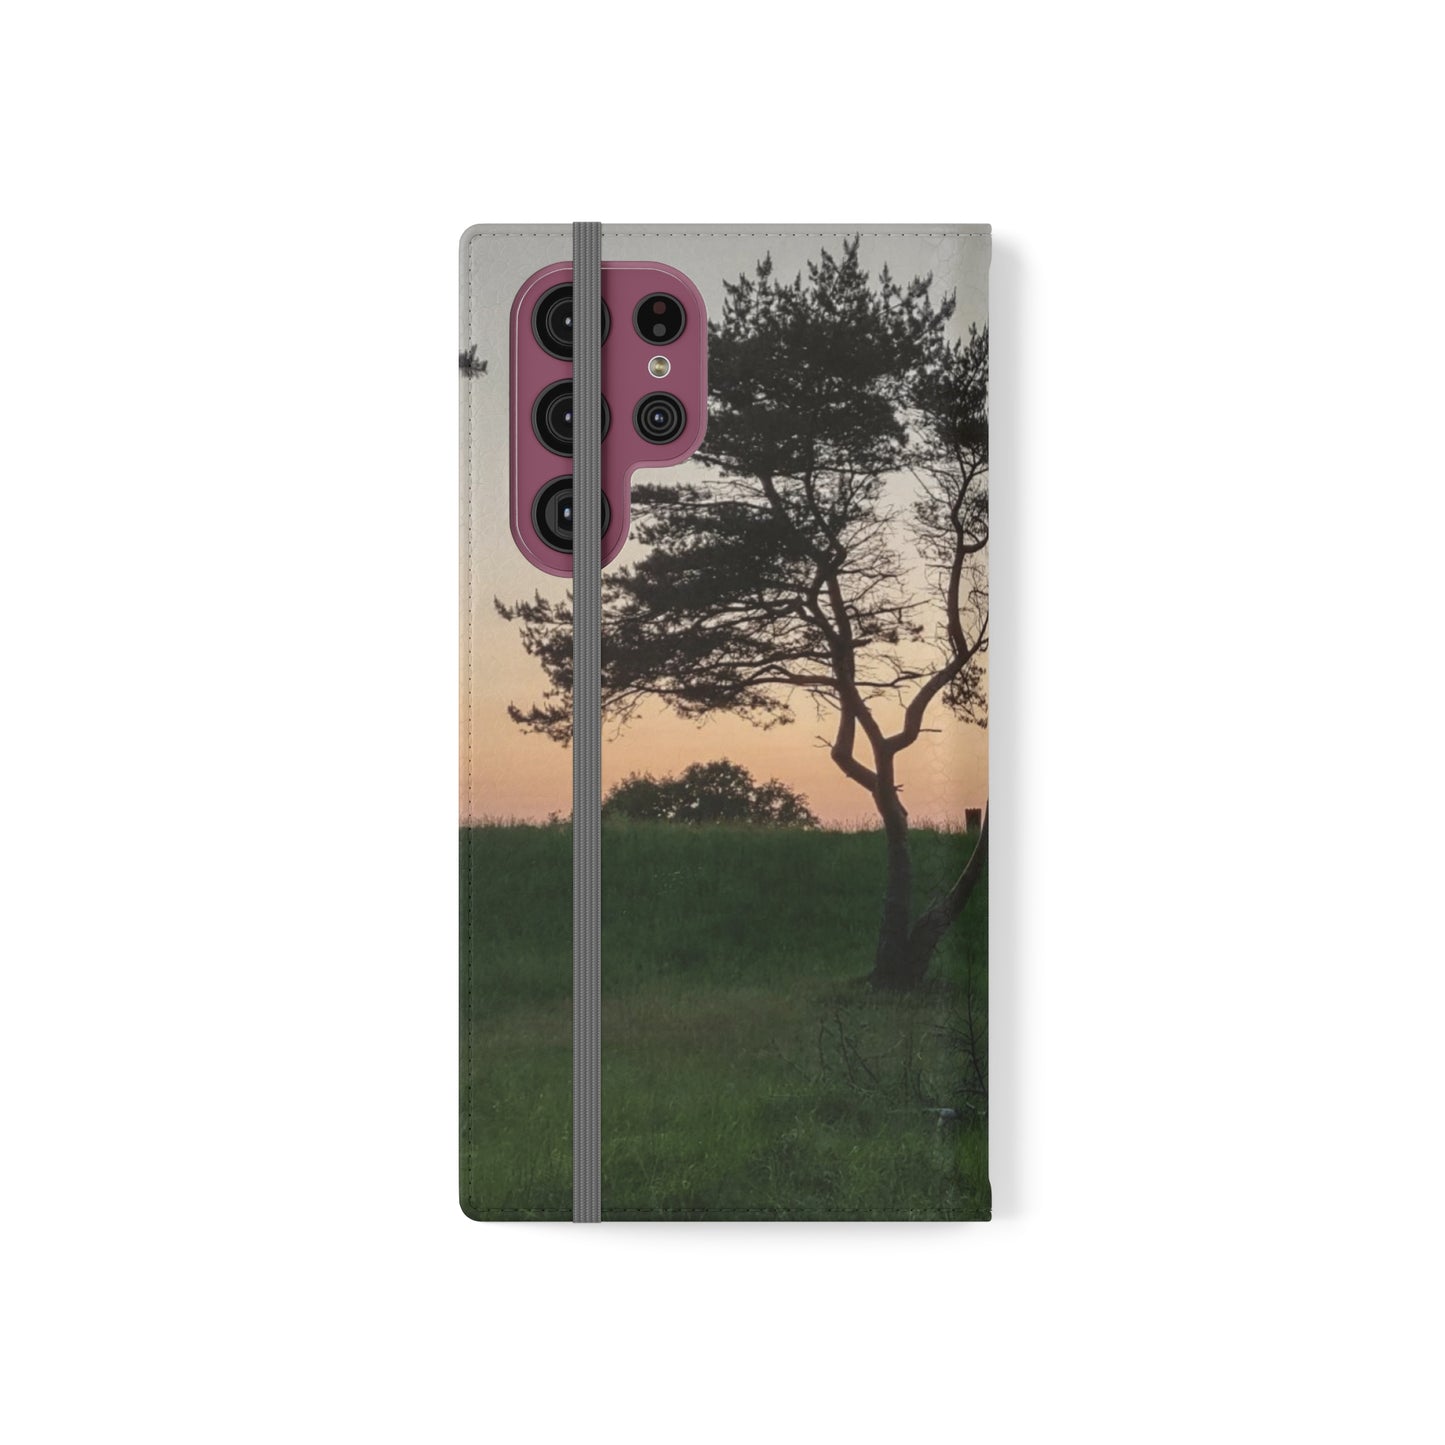 Tree at Sunset - Flip Cases